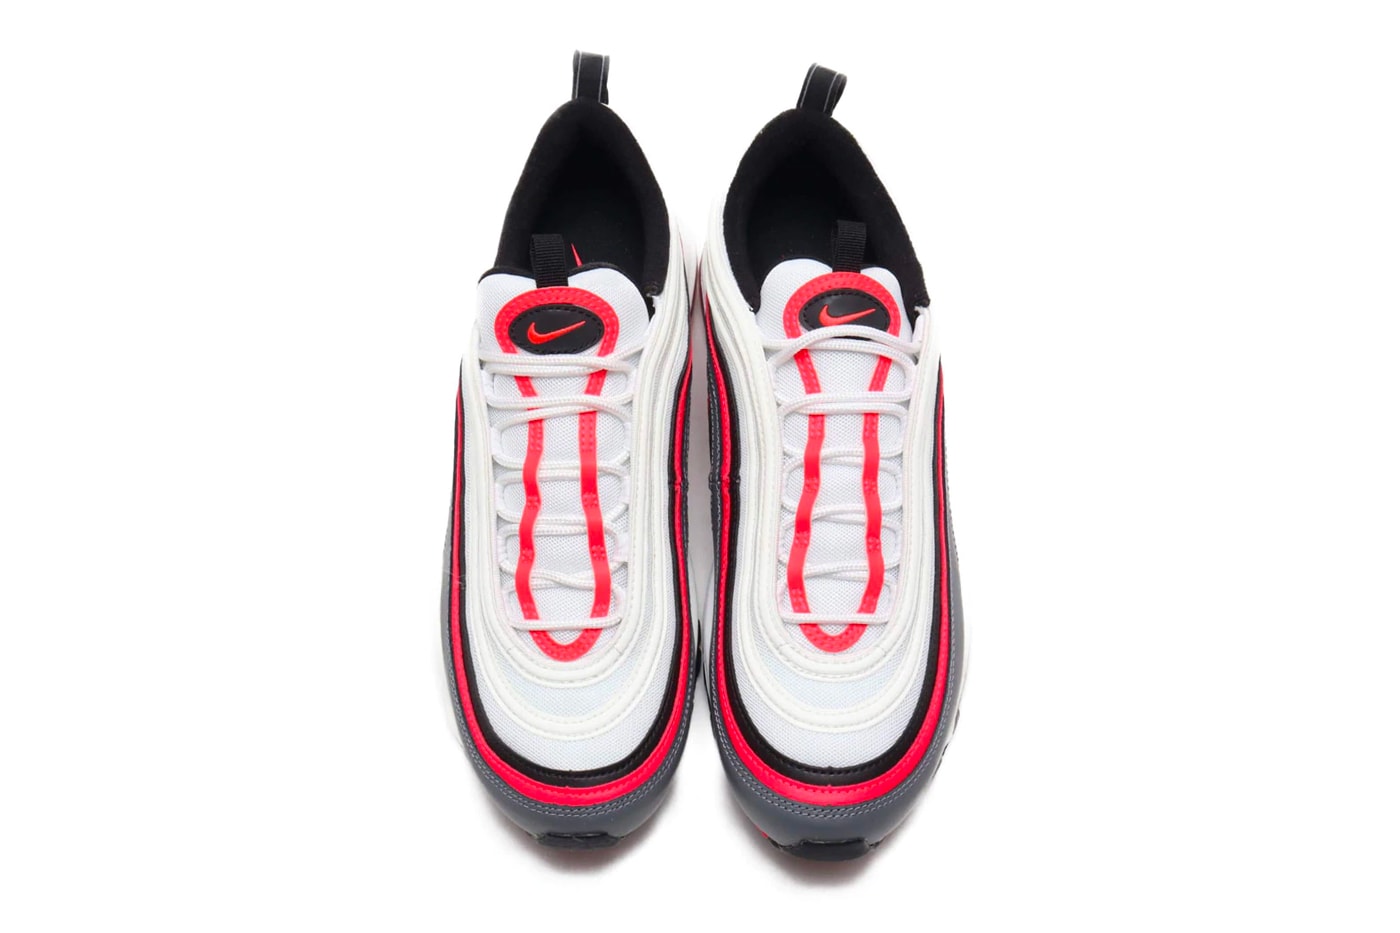 Nike Air Max 97 White Laser Crimson BLACK SMOKE GREY menswear streetwear sneakers footwear shoes trainers runners spring summer 2020 collection swoosh cw5419 100 